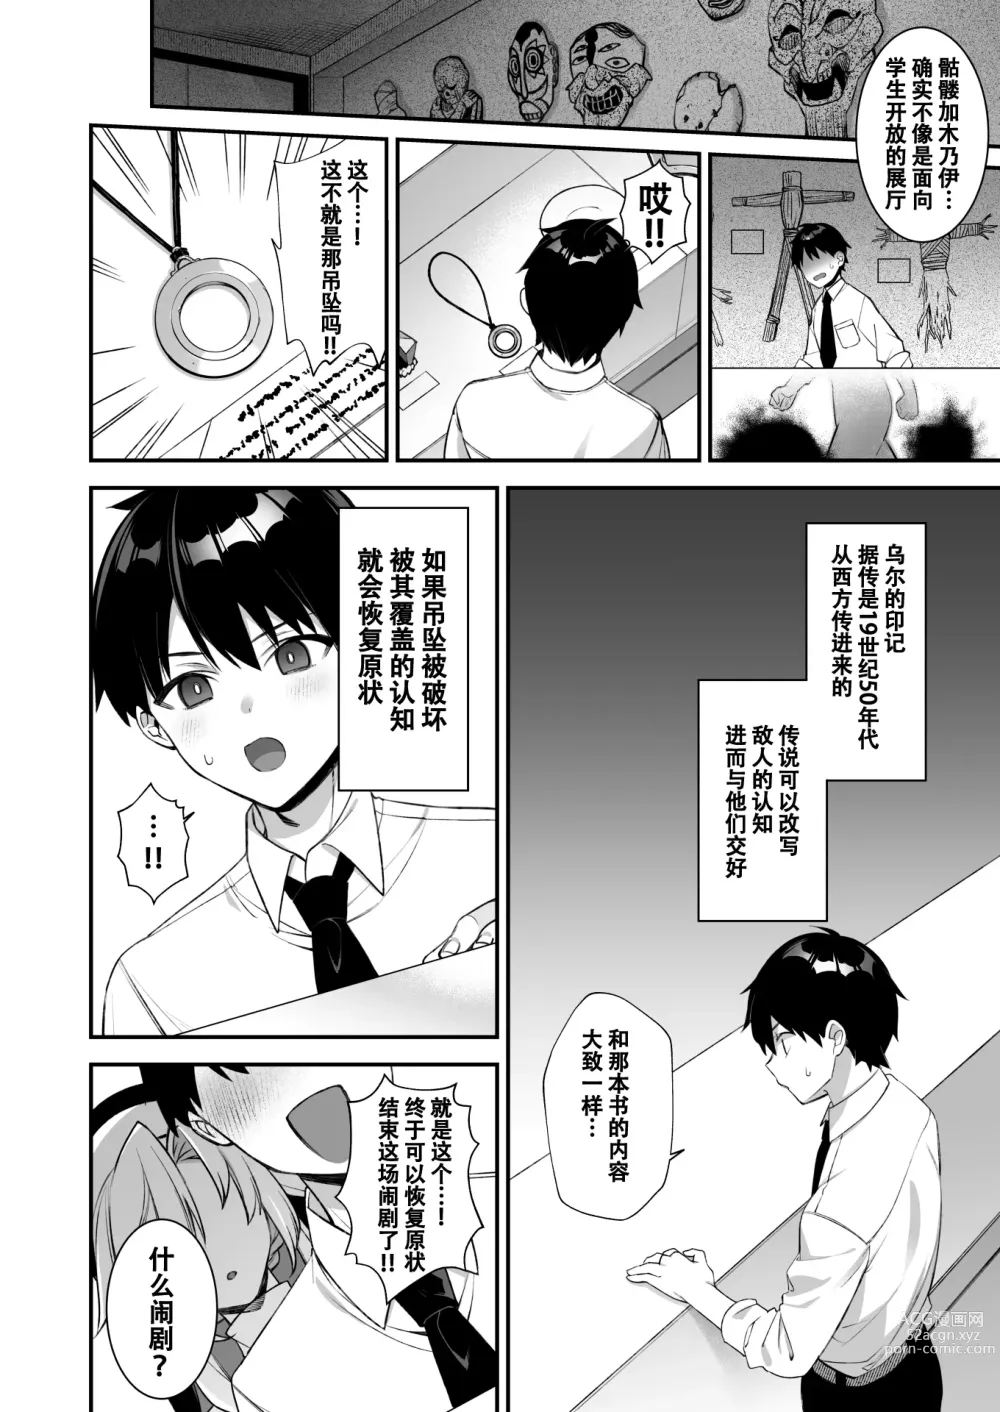 Page 13 of manga Hypnosis 3 (uncensored)